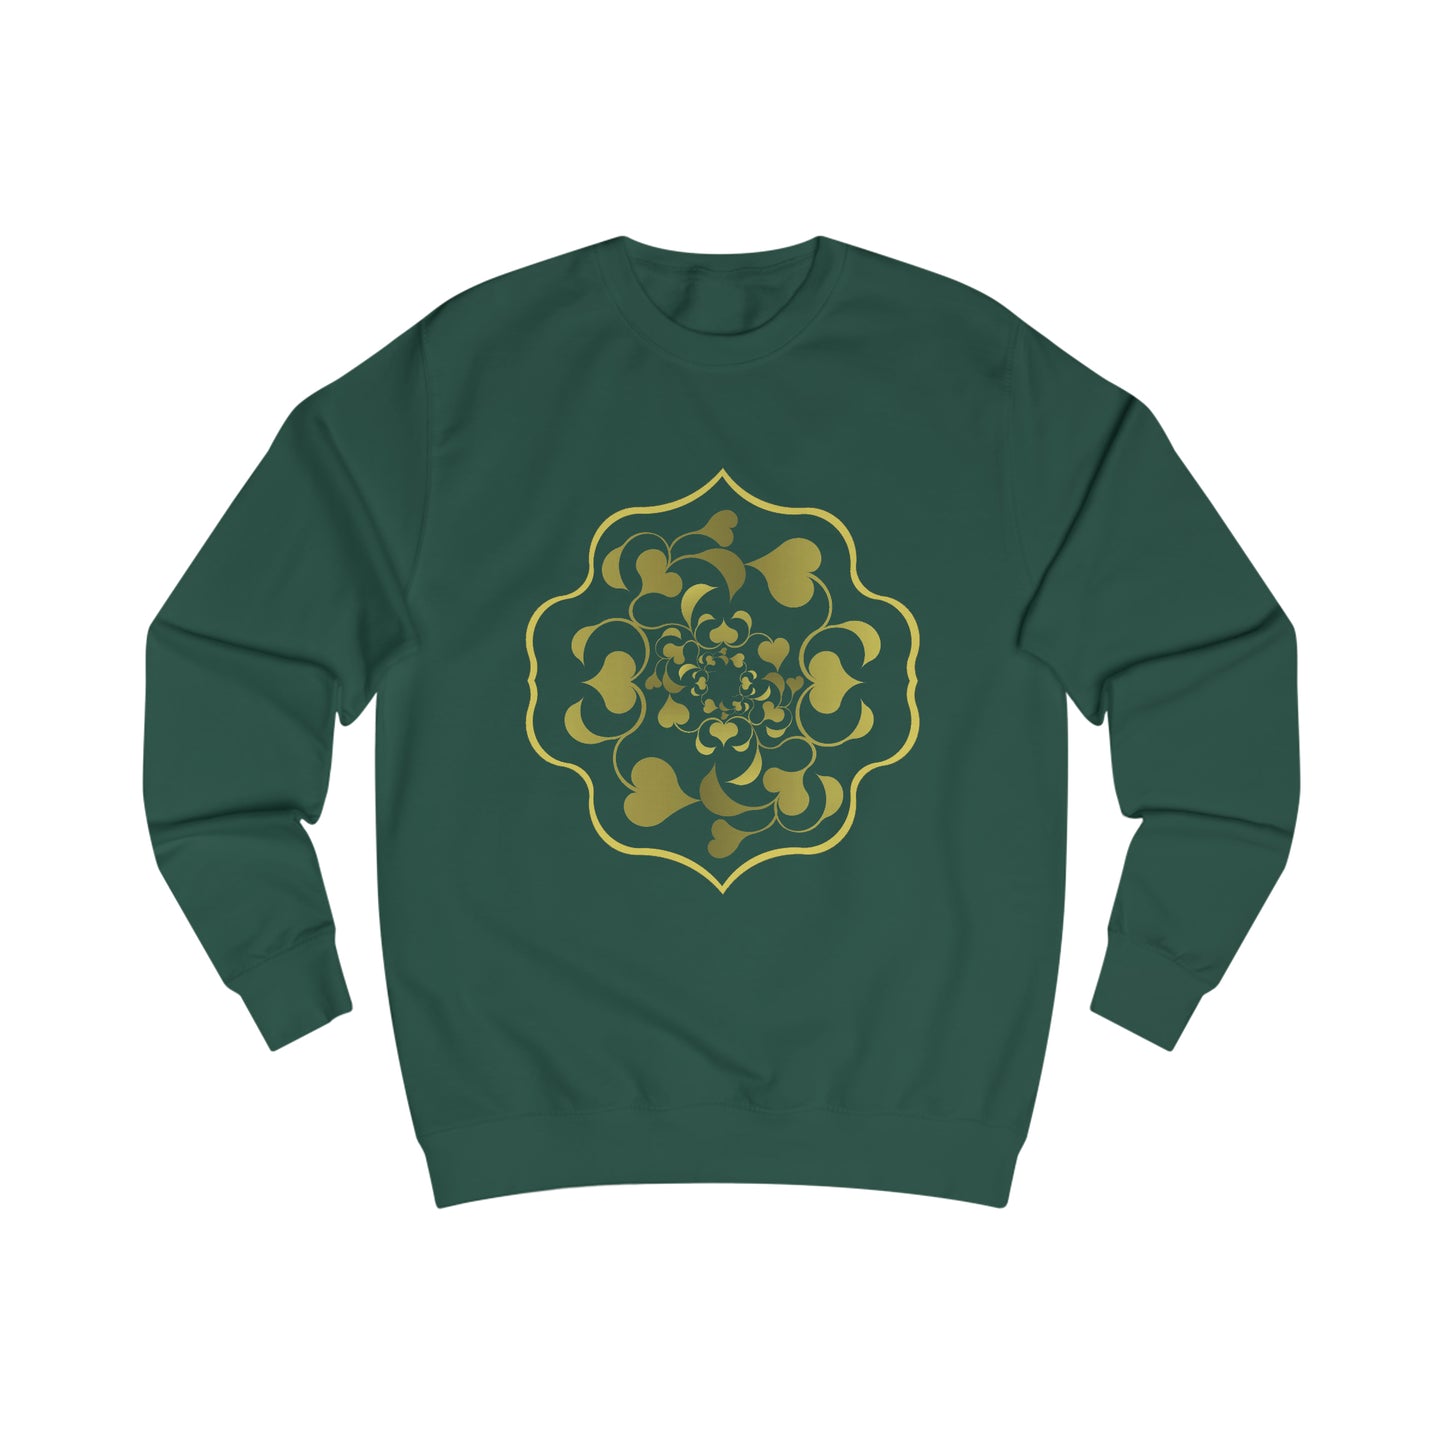 Men's Sweatshirt - Fraflower